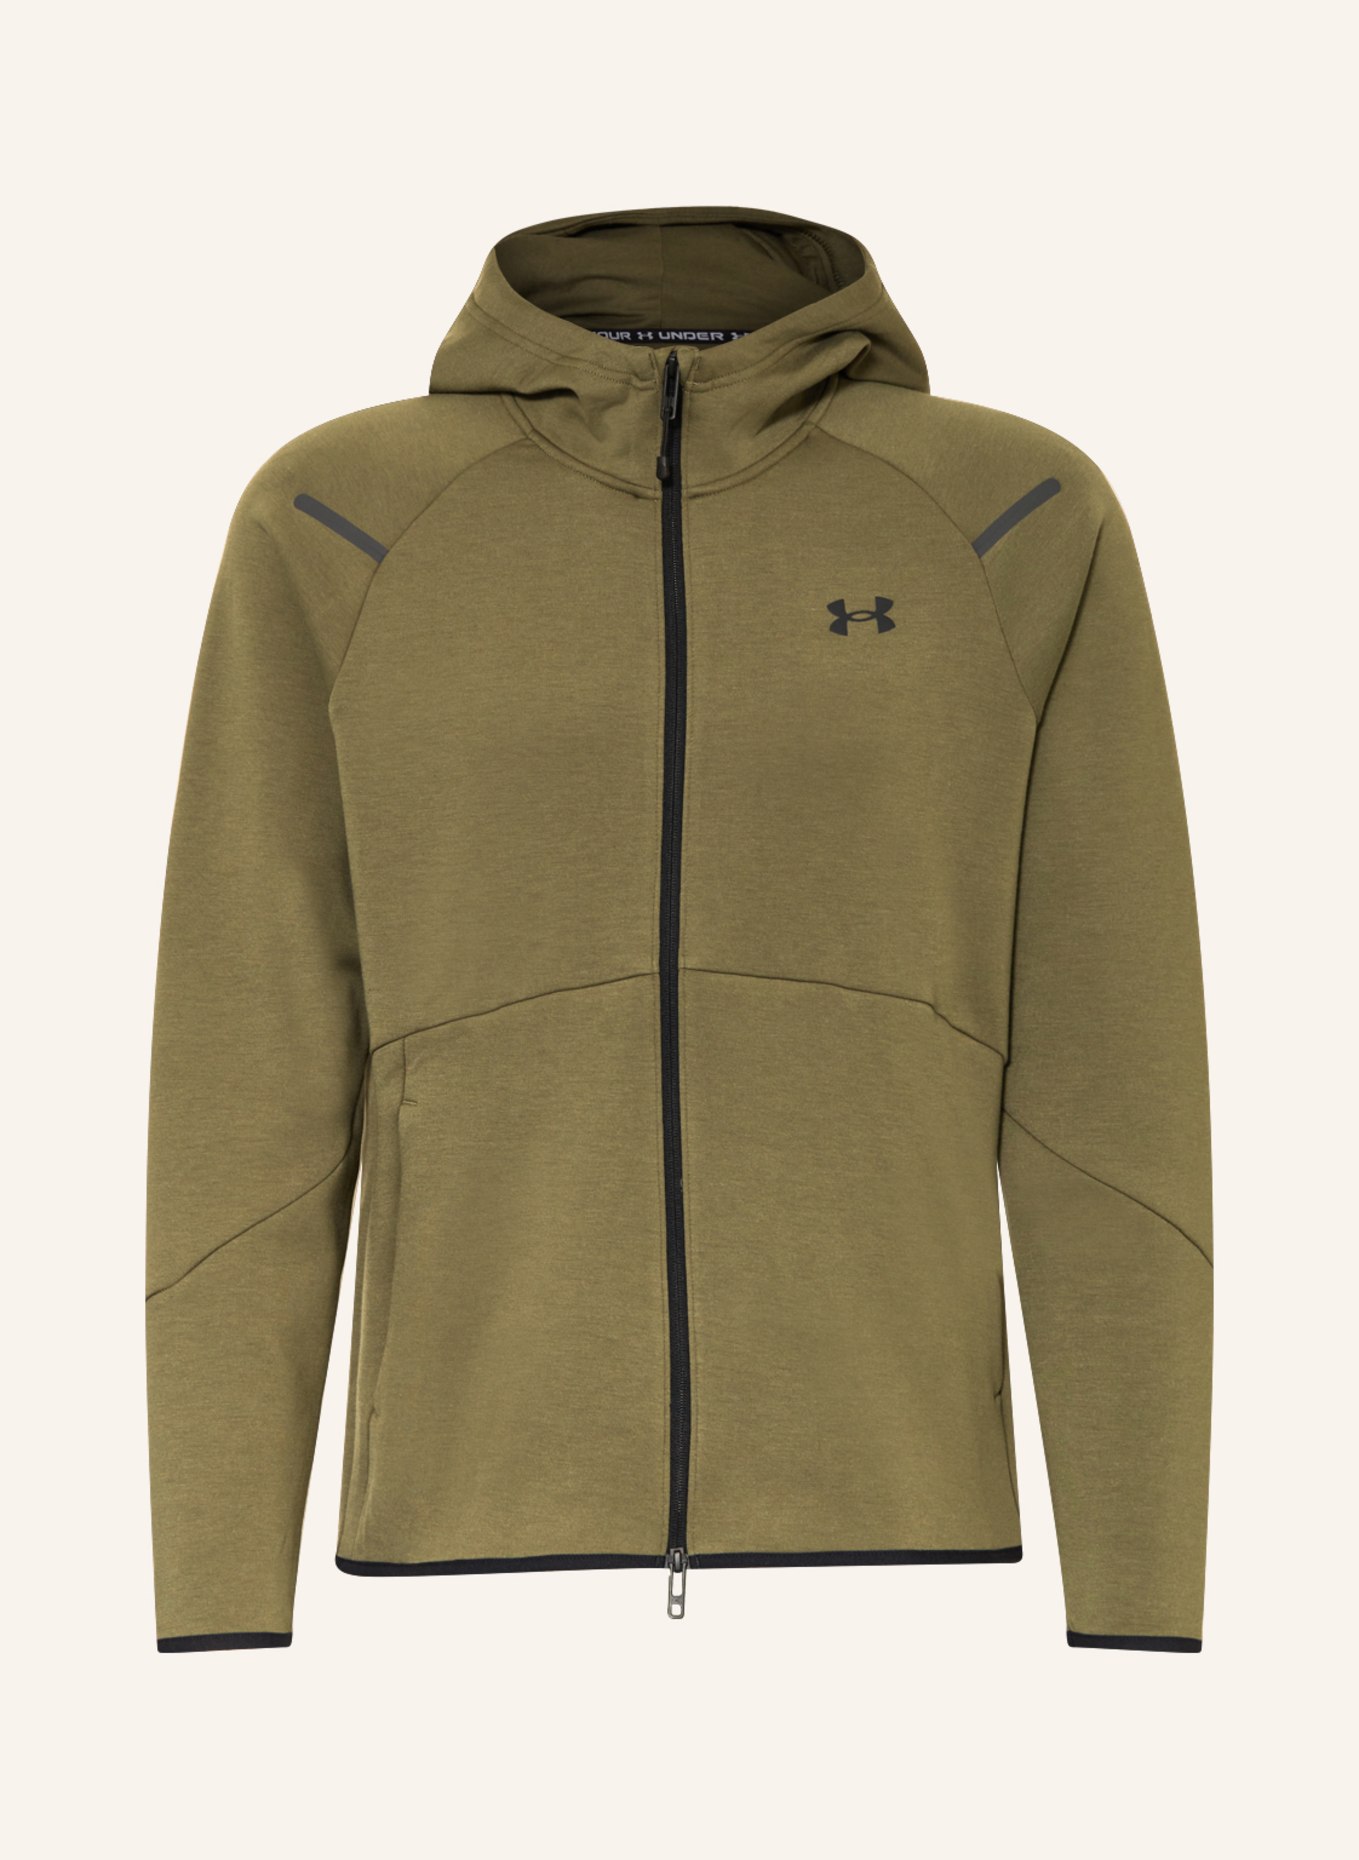 Under Armour Unstoppable fleece full zip hoodie in khaki